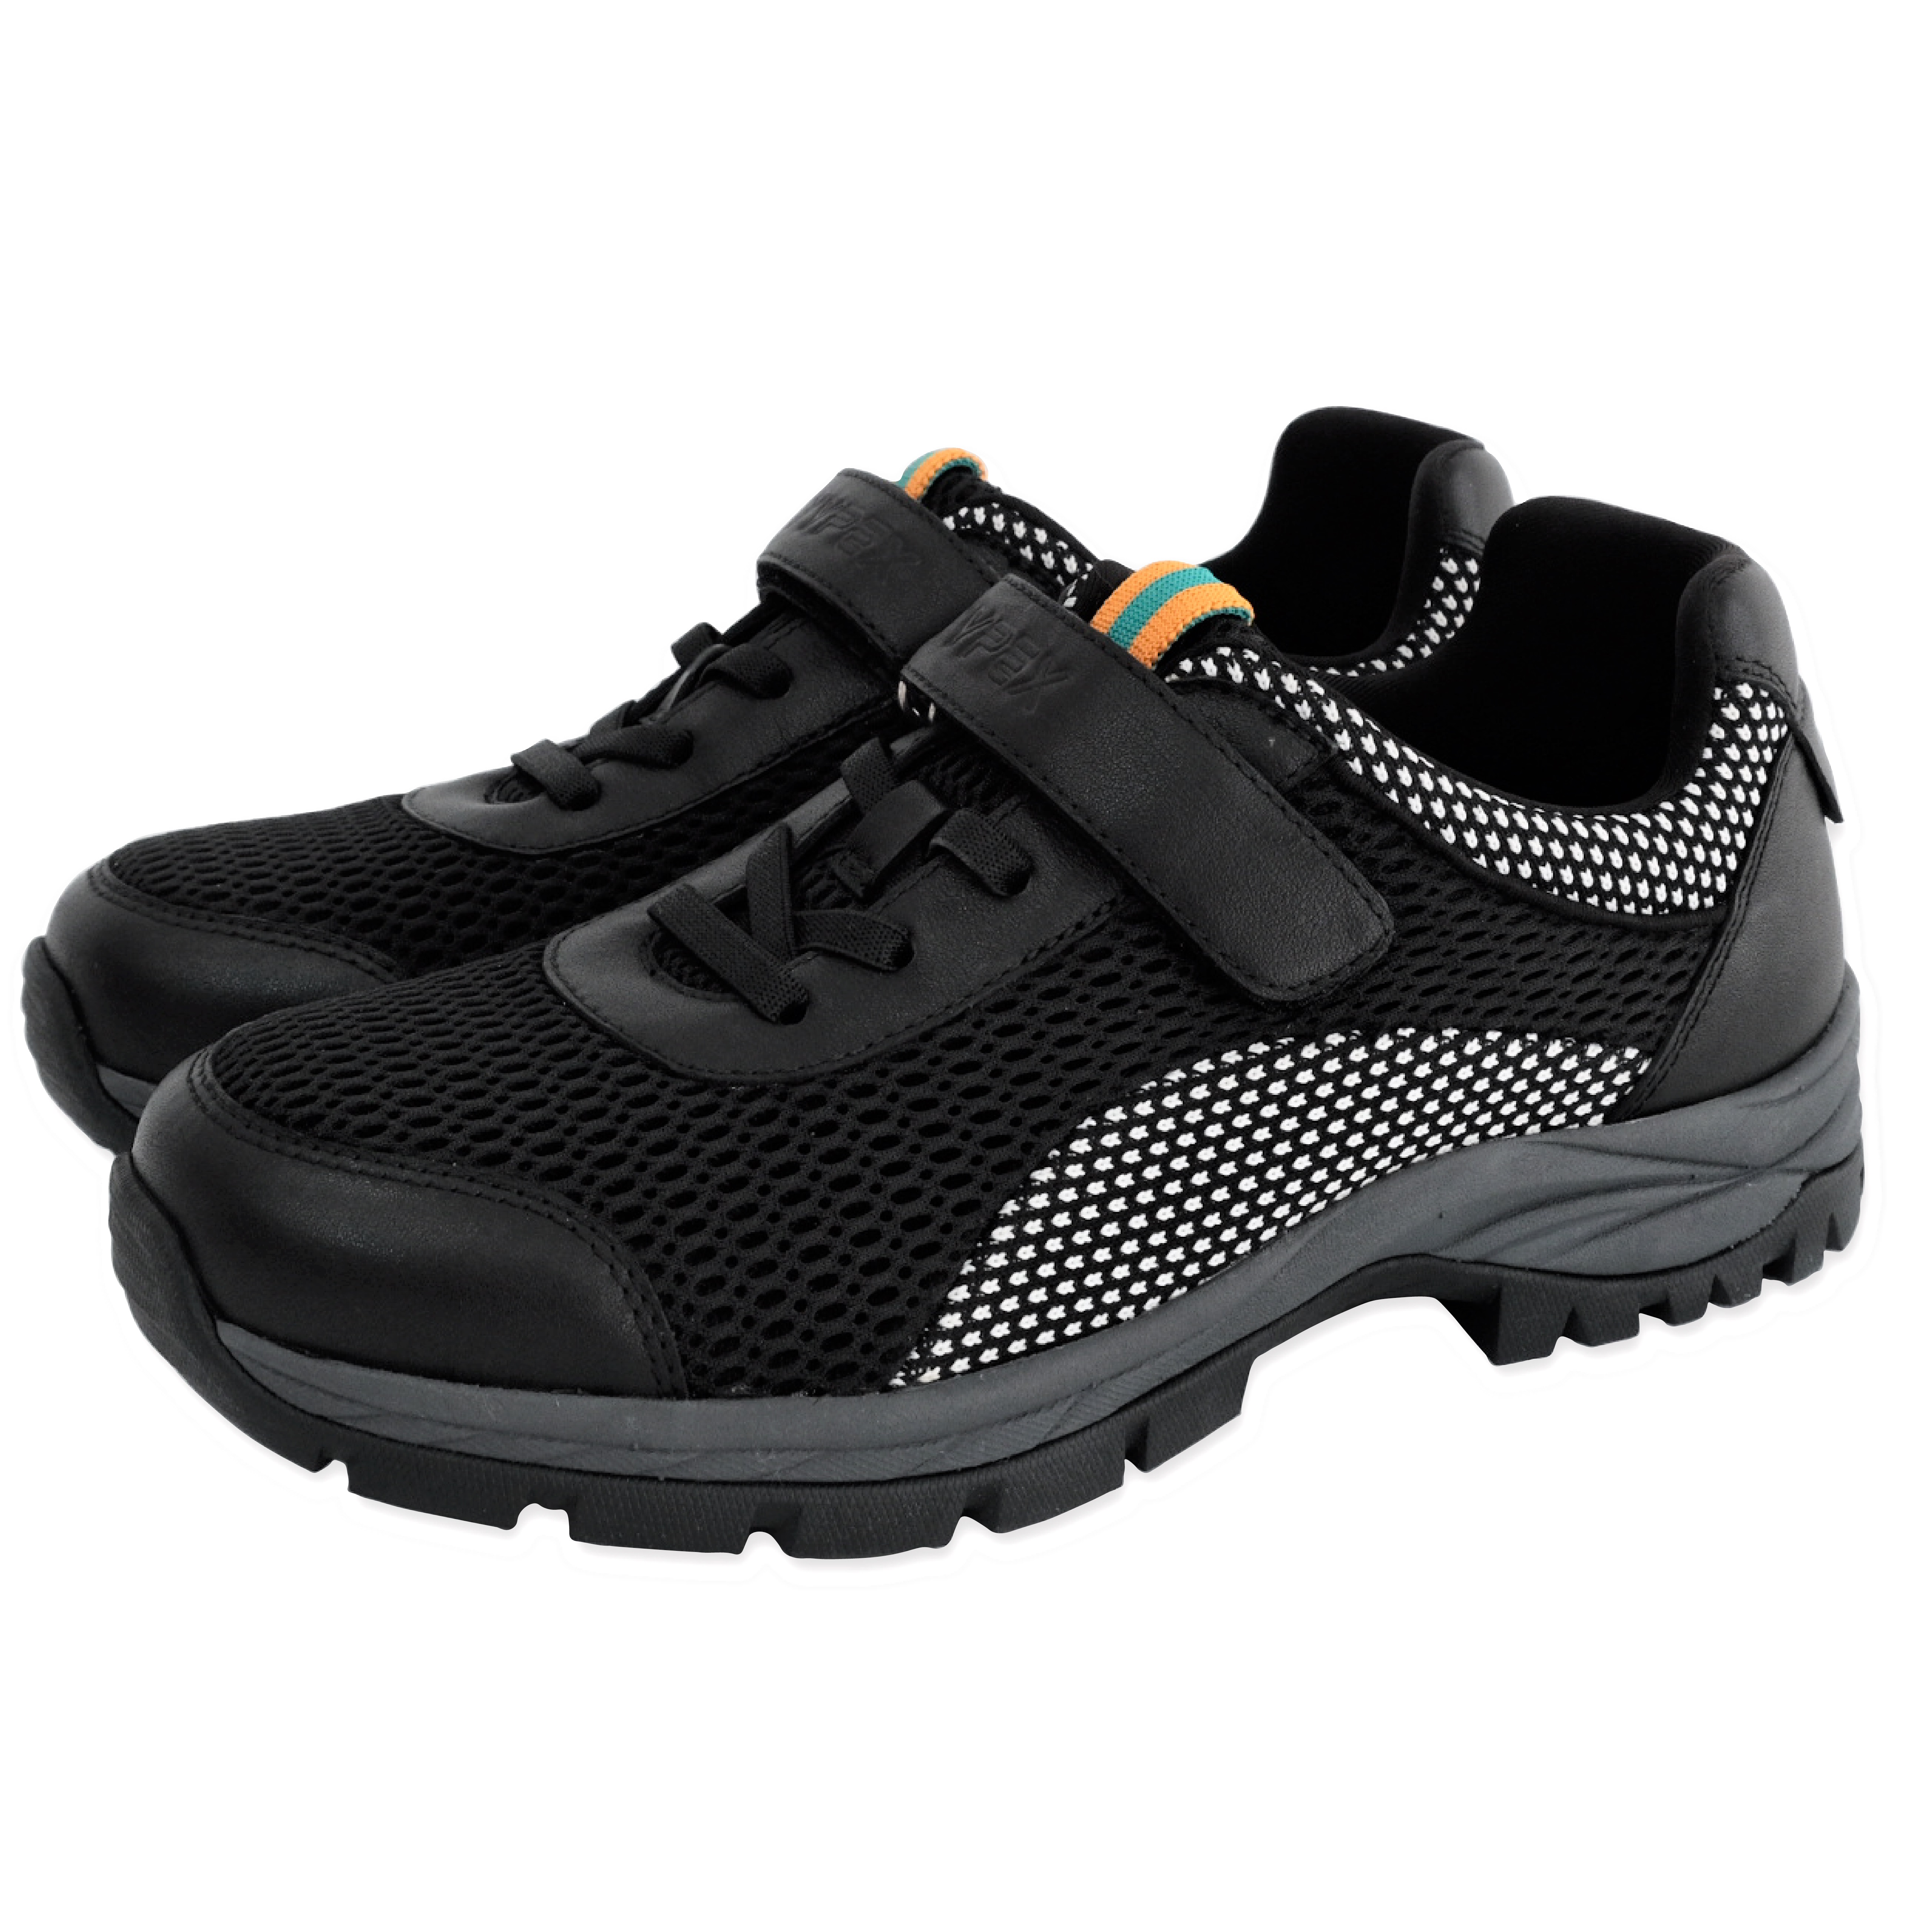 《WYPEX》極寬楦機能舒適寬掌鞋,,獨家開發保證好穿,HT6909-02,《WYPEX》極寬楦機能舒適寬掌鞋,